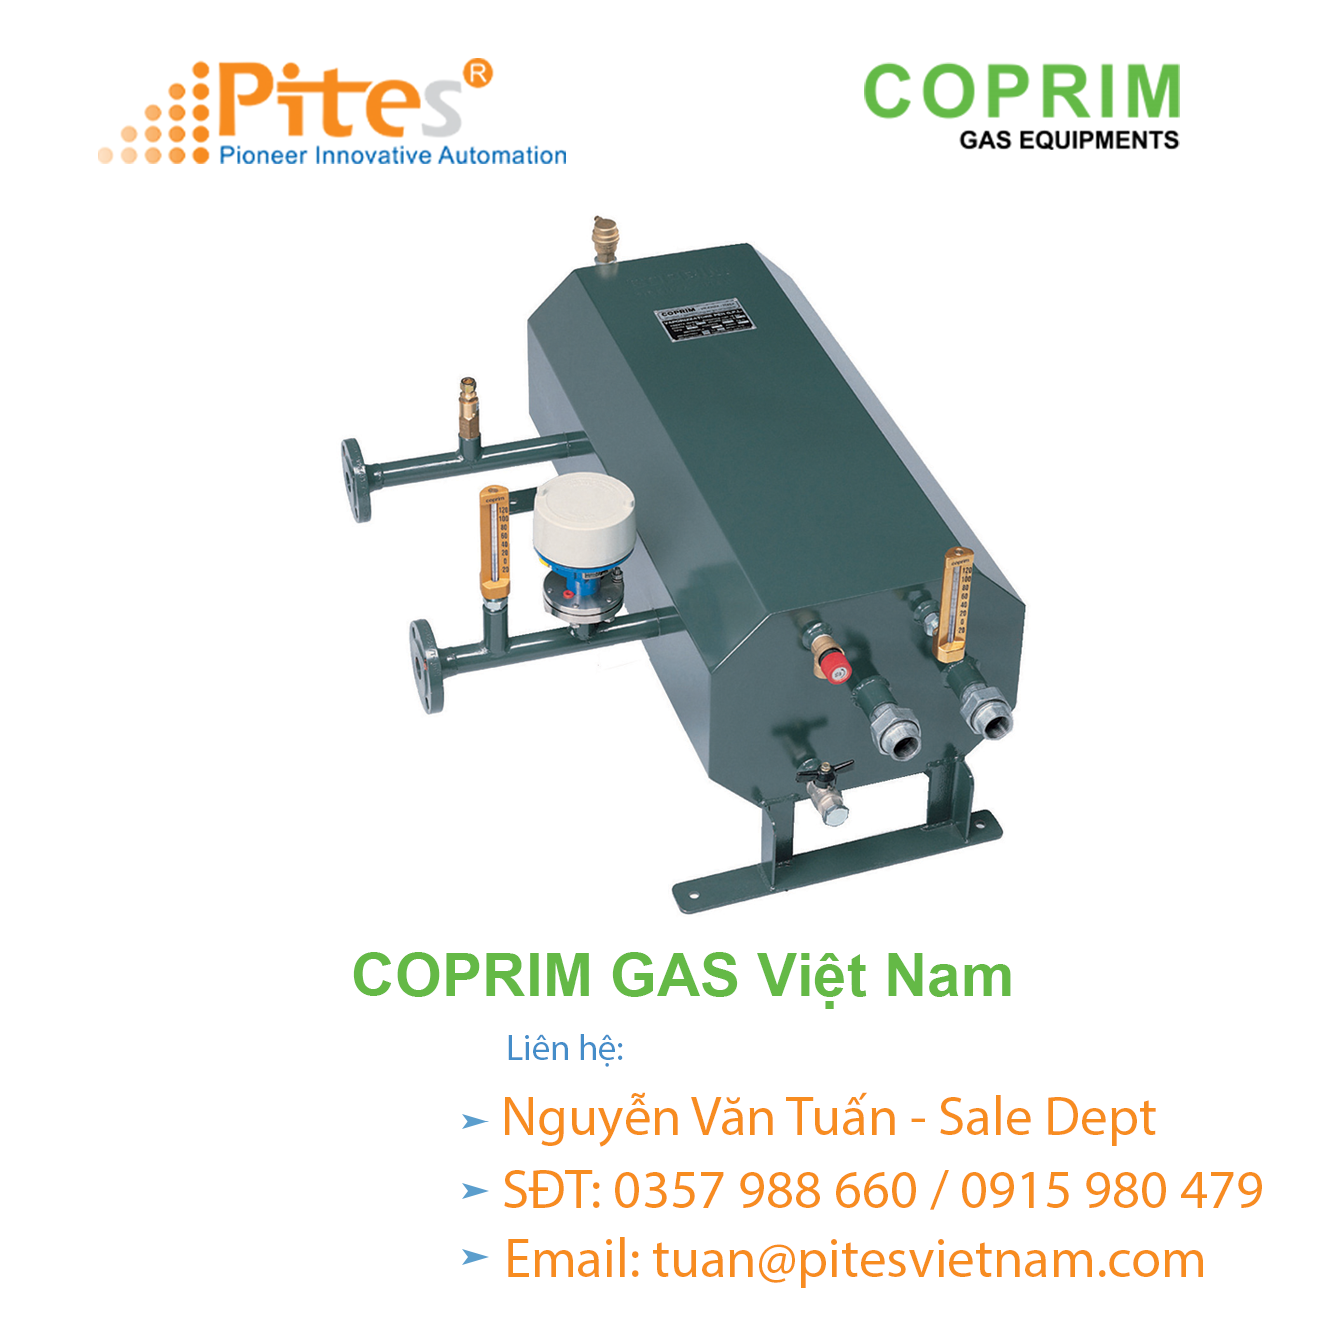 coprim-gas-vietnam-coprim-gas-viet-nam-dai-ly-coprim-gas-list-code-coprim-gas-part-15.png